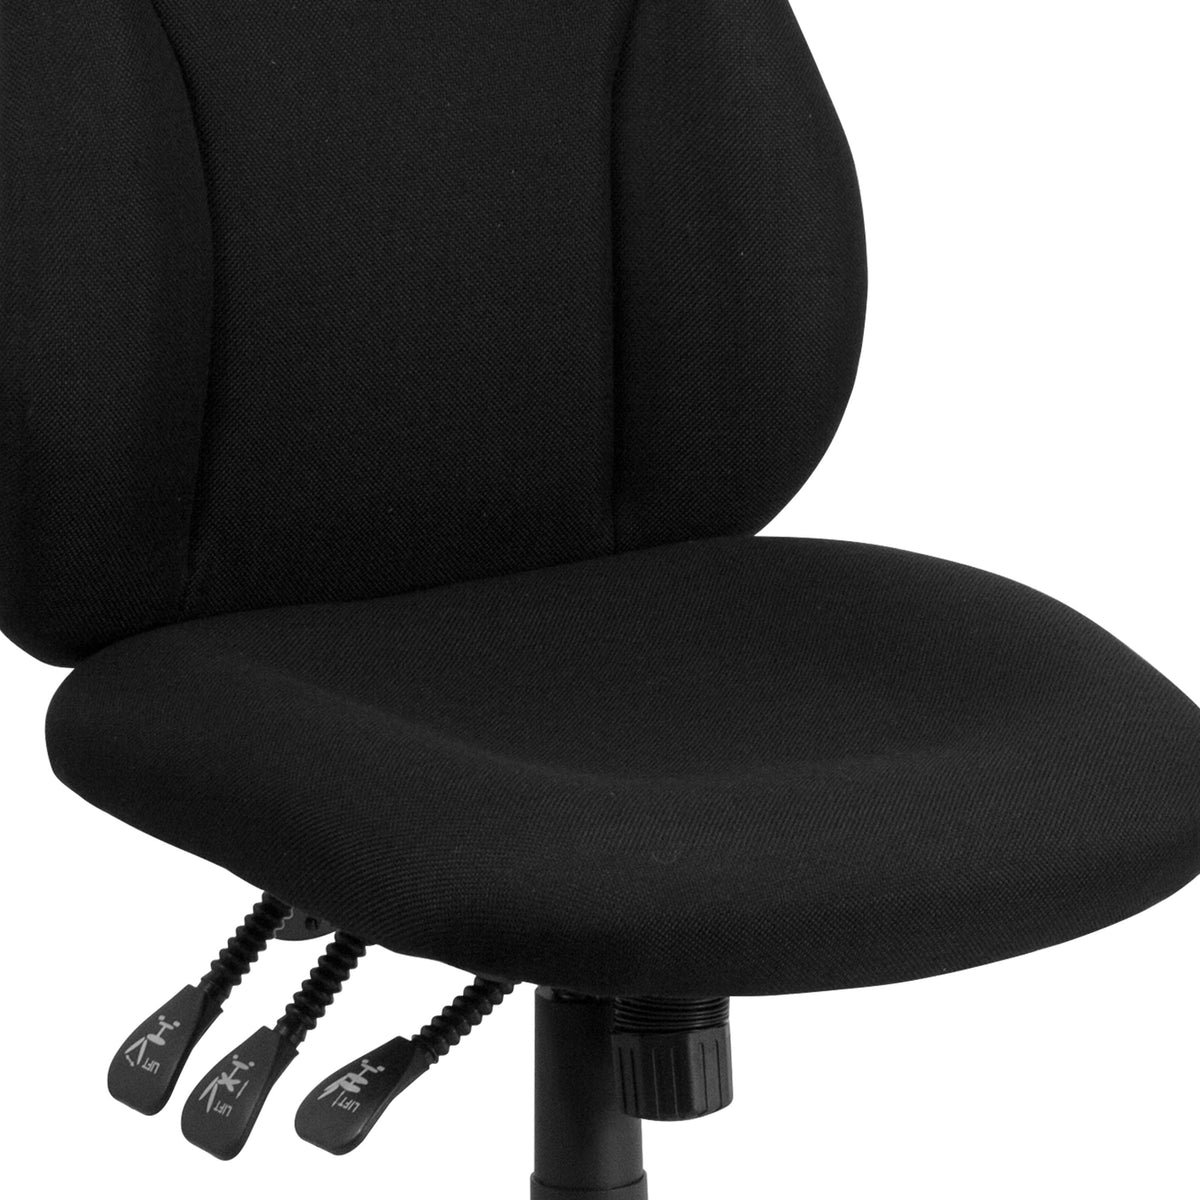 High Back Black Fabric Multifunction Swivel Ergonomic Task Office Chair